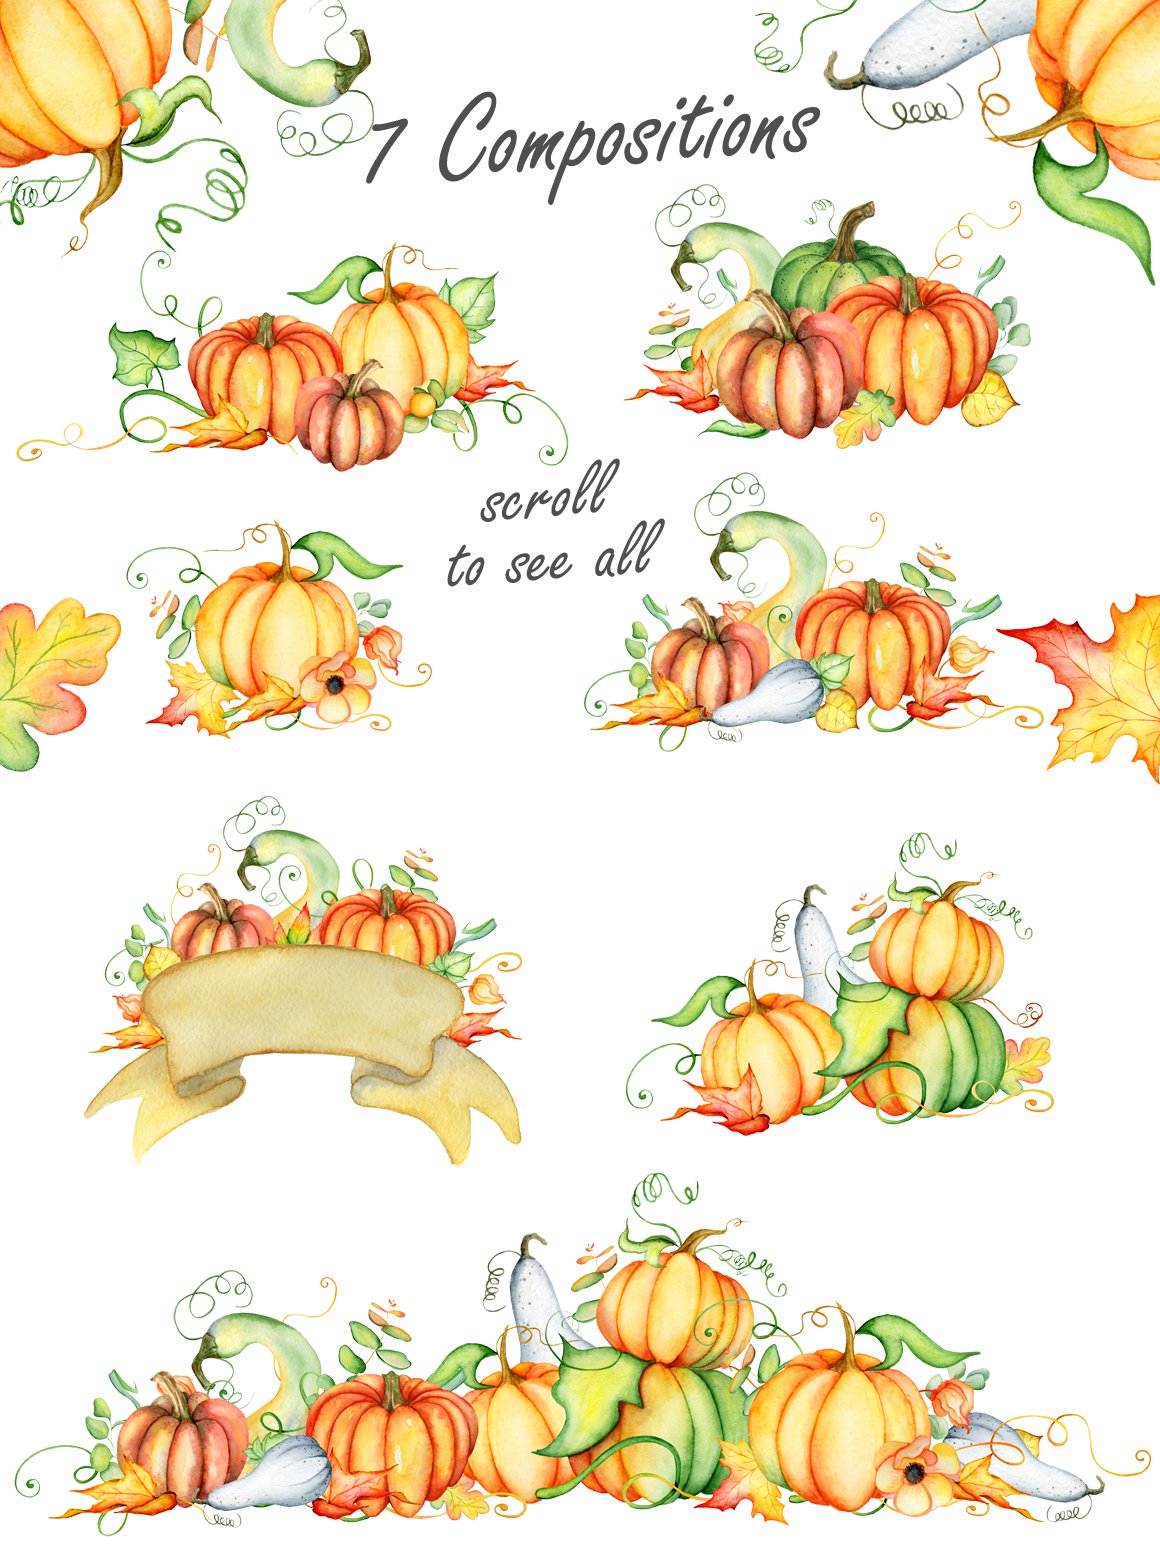 Diverse of small pumpkins compositions.